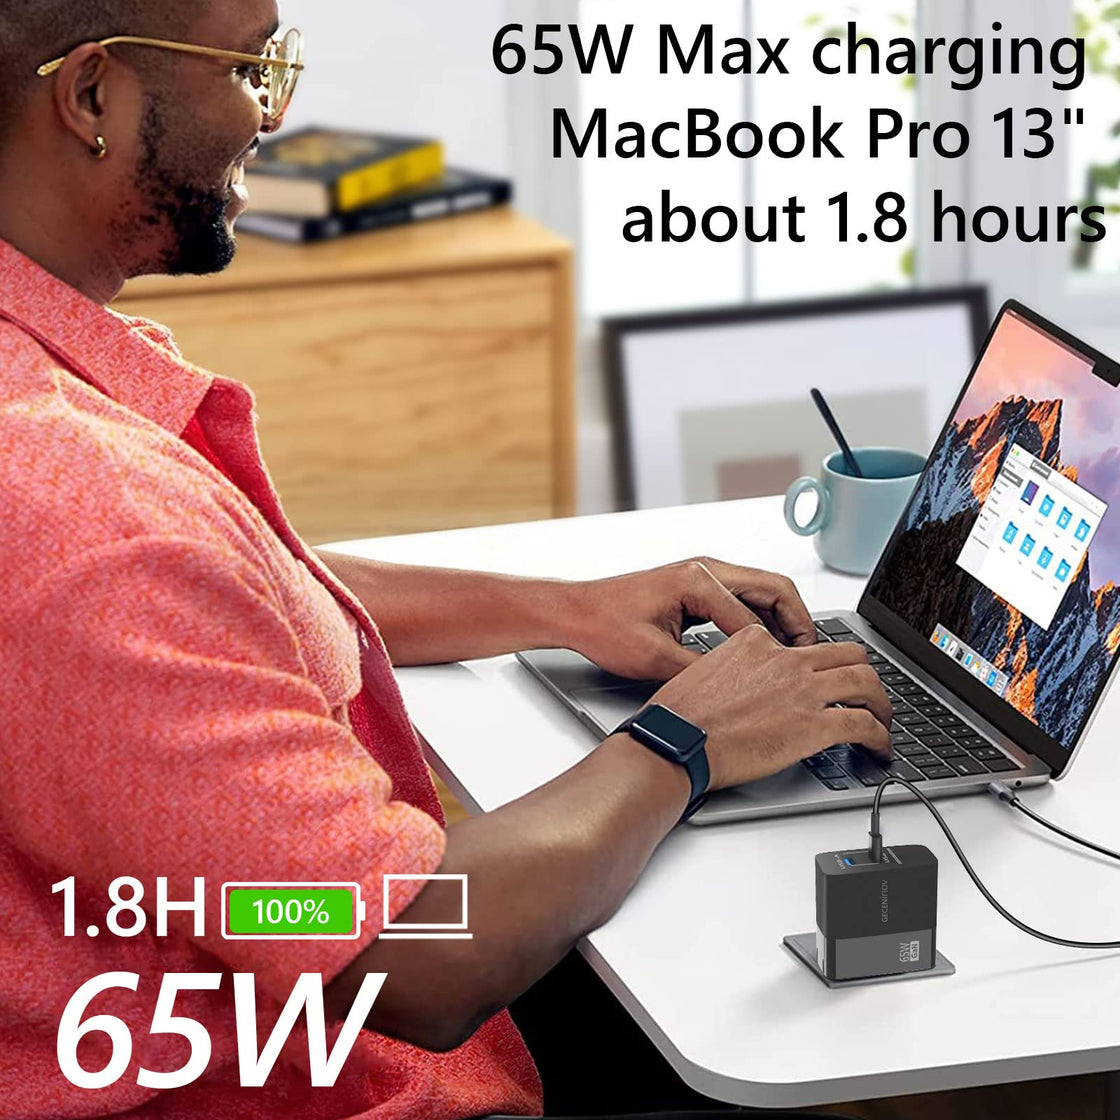 GECENinov 65W USB C Fast Charging Block GaN Fast Charger